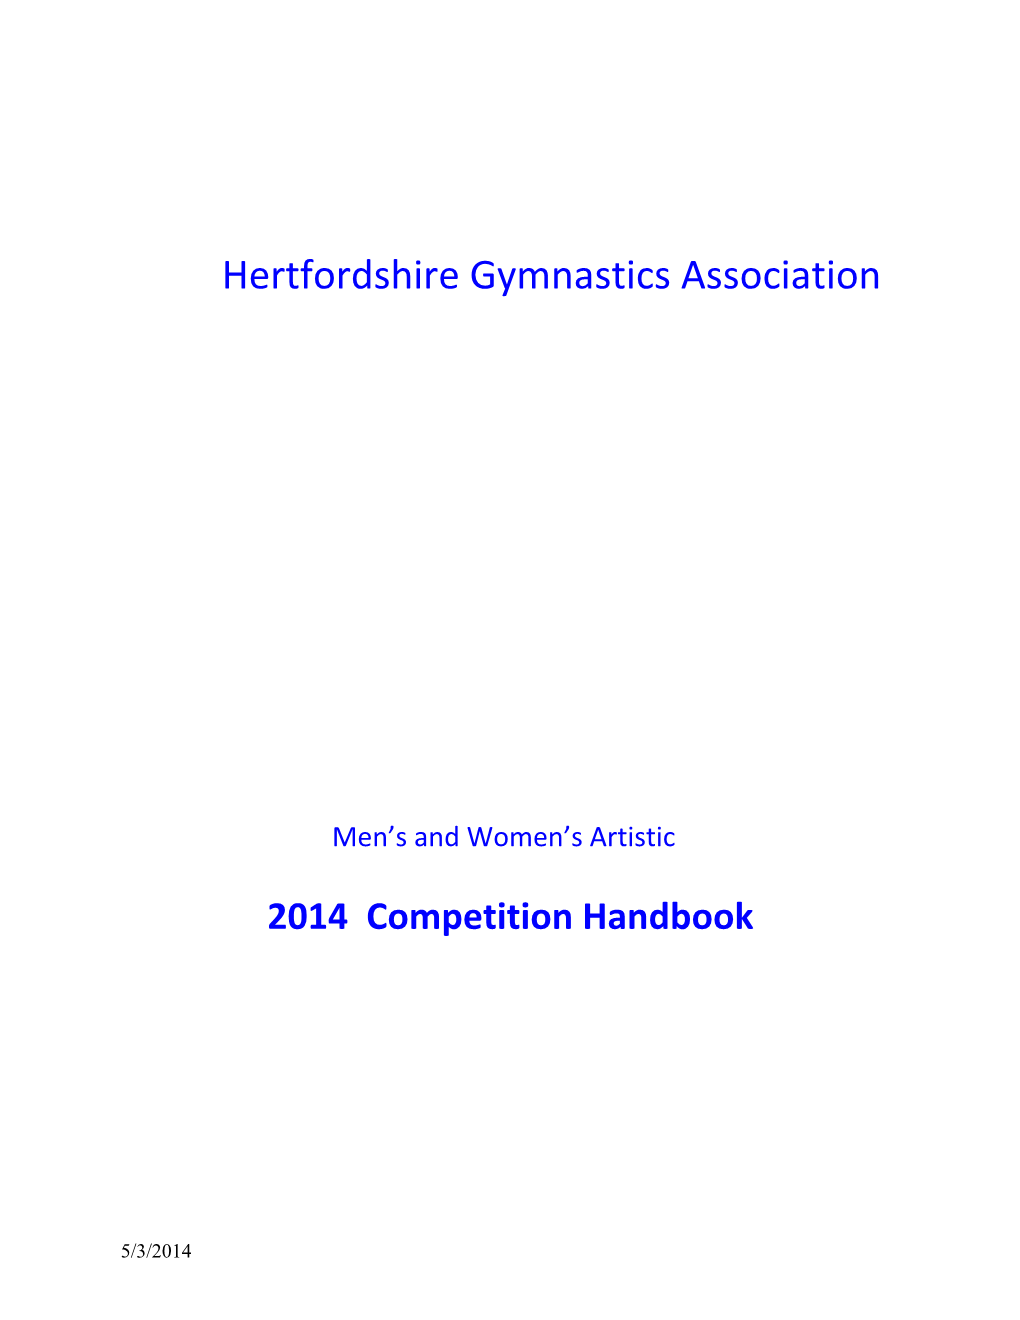 Hertfordshire Amateur Gymnastics Association